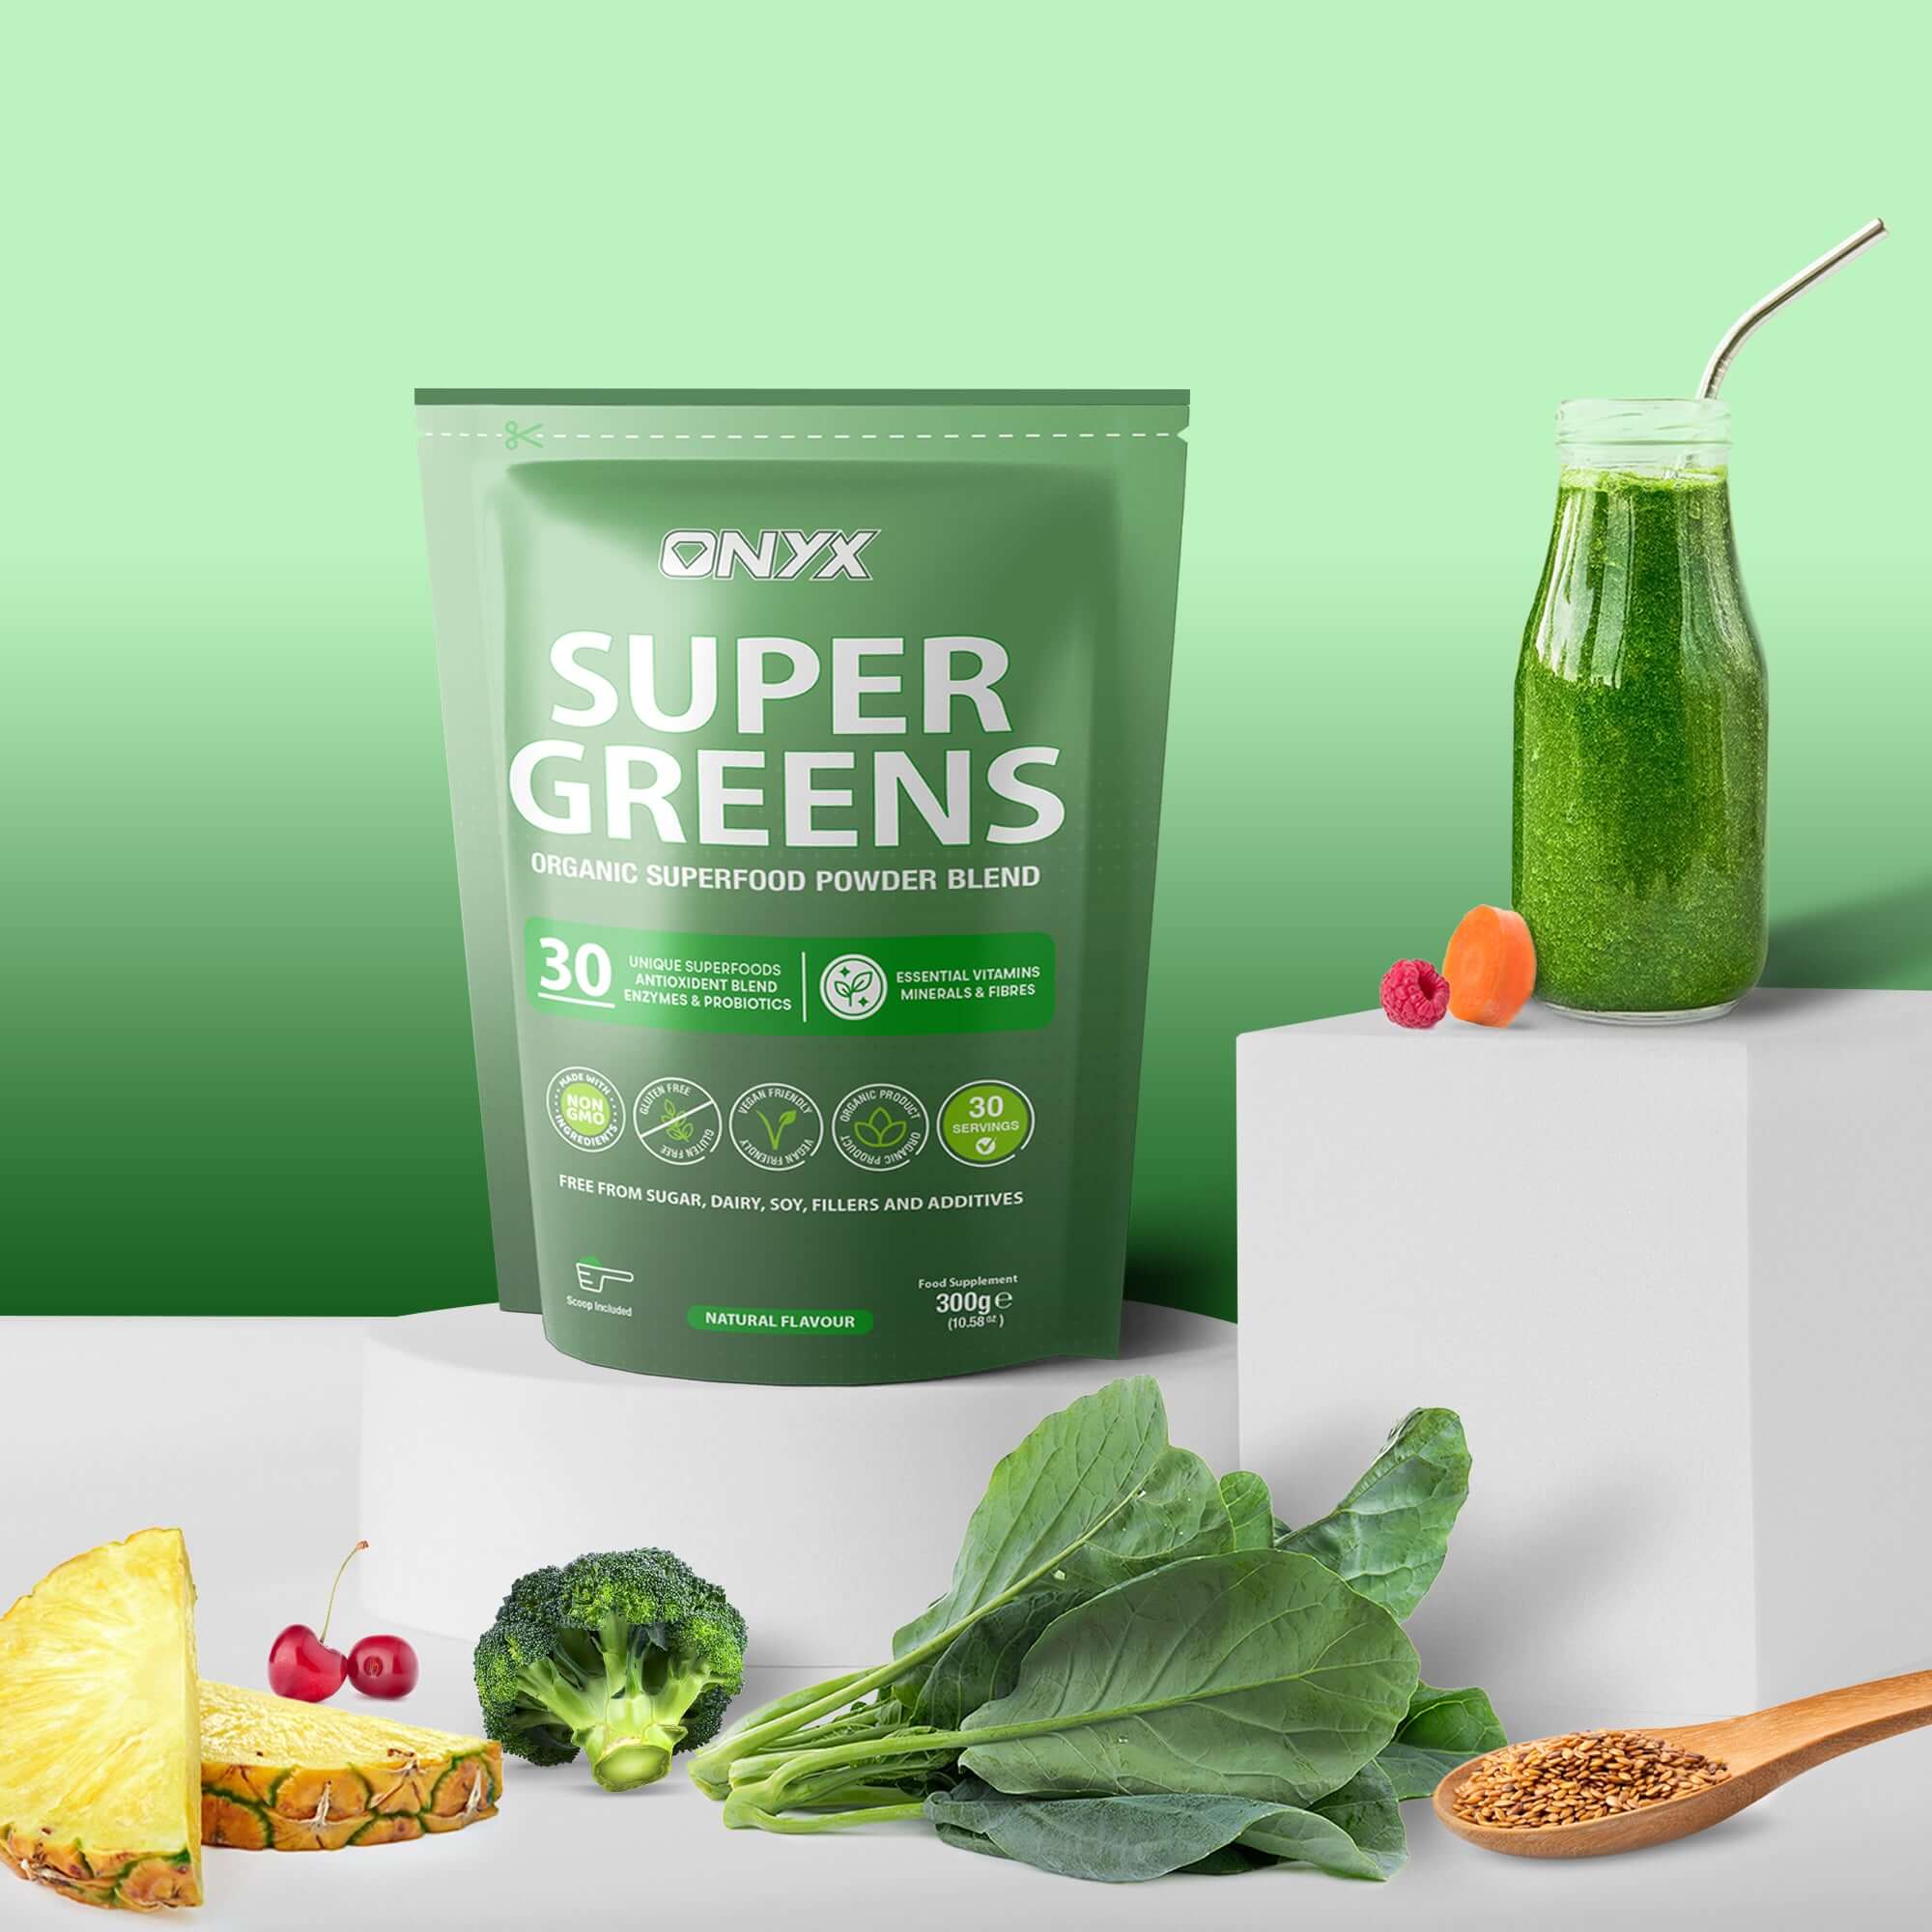 ONYX Super Greens blend of 30 natural ingredients, organic superfood powder with vitamins, minerals, fibre, vegan, gluten-free, 300 grams.